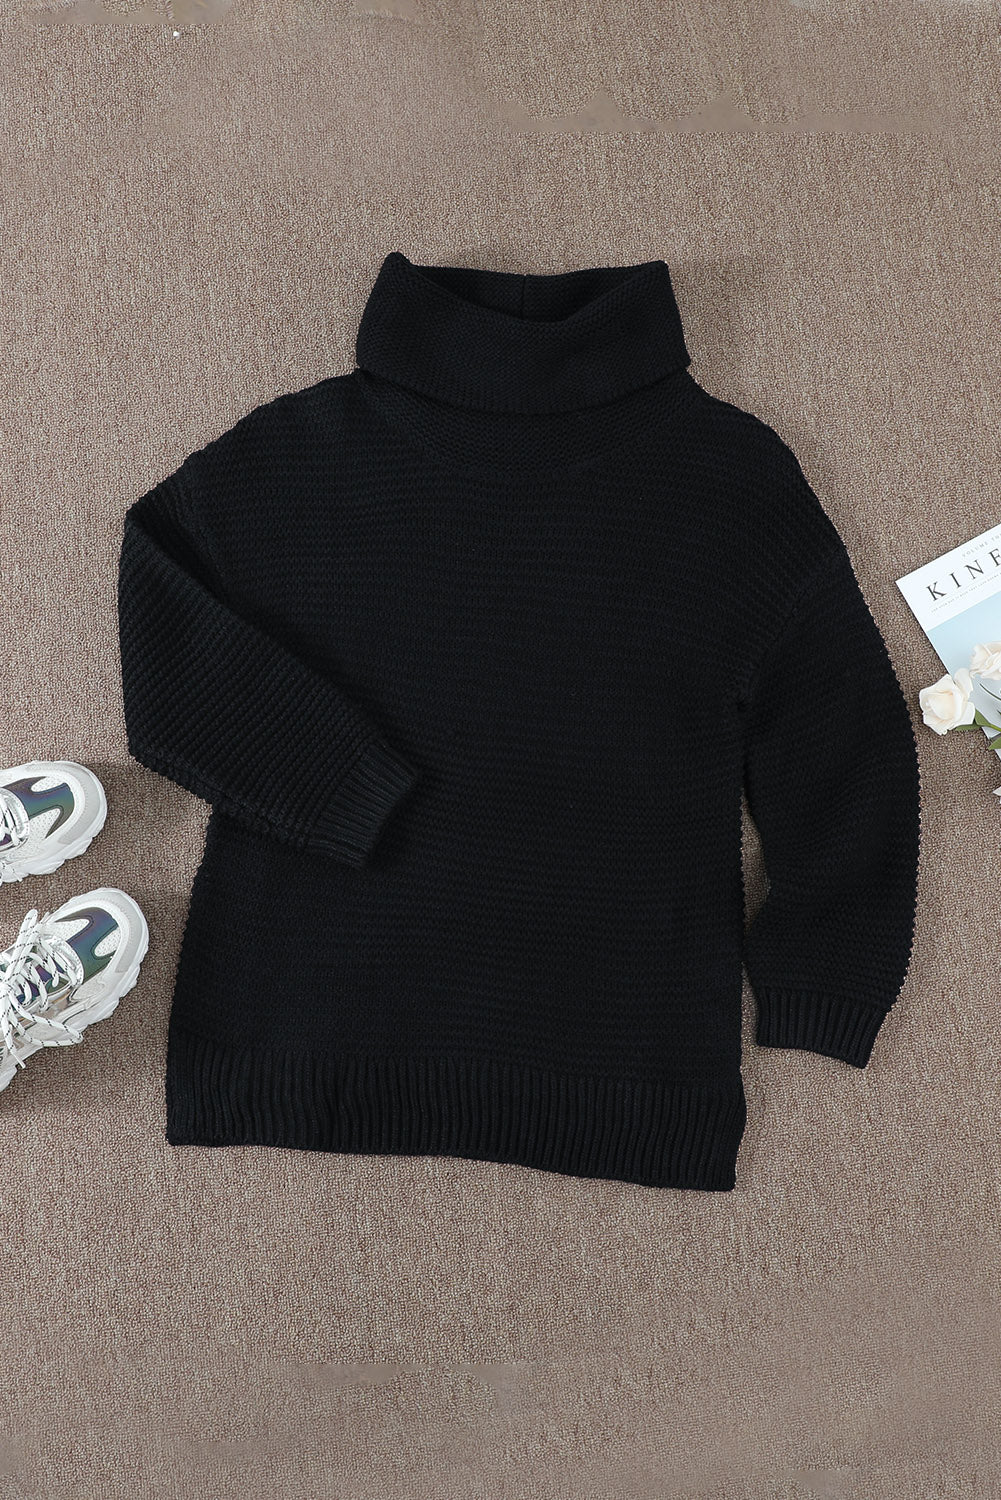 Black Cozy Long Sleeves Turtleneck Sweater